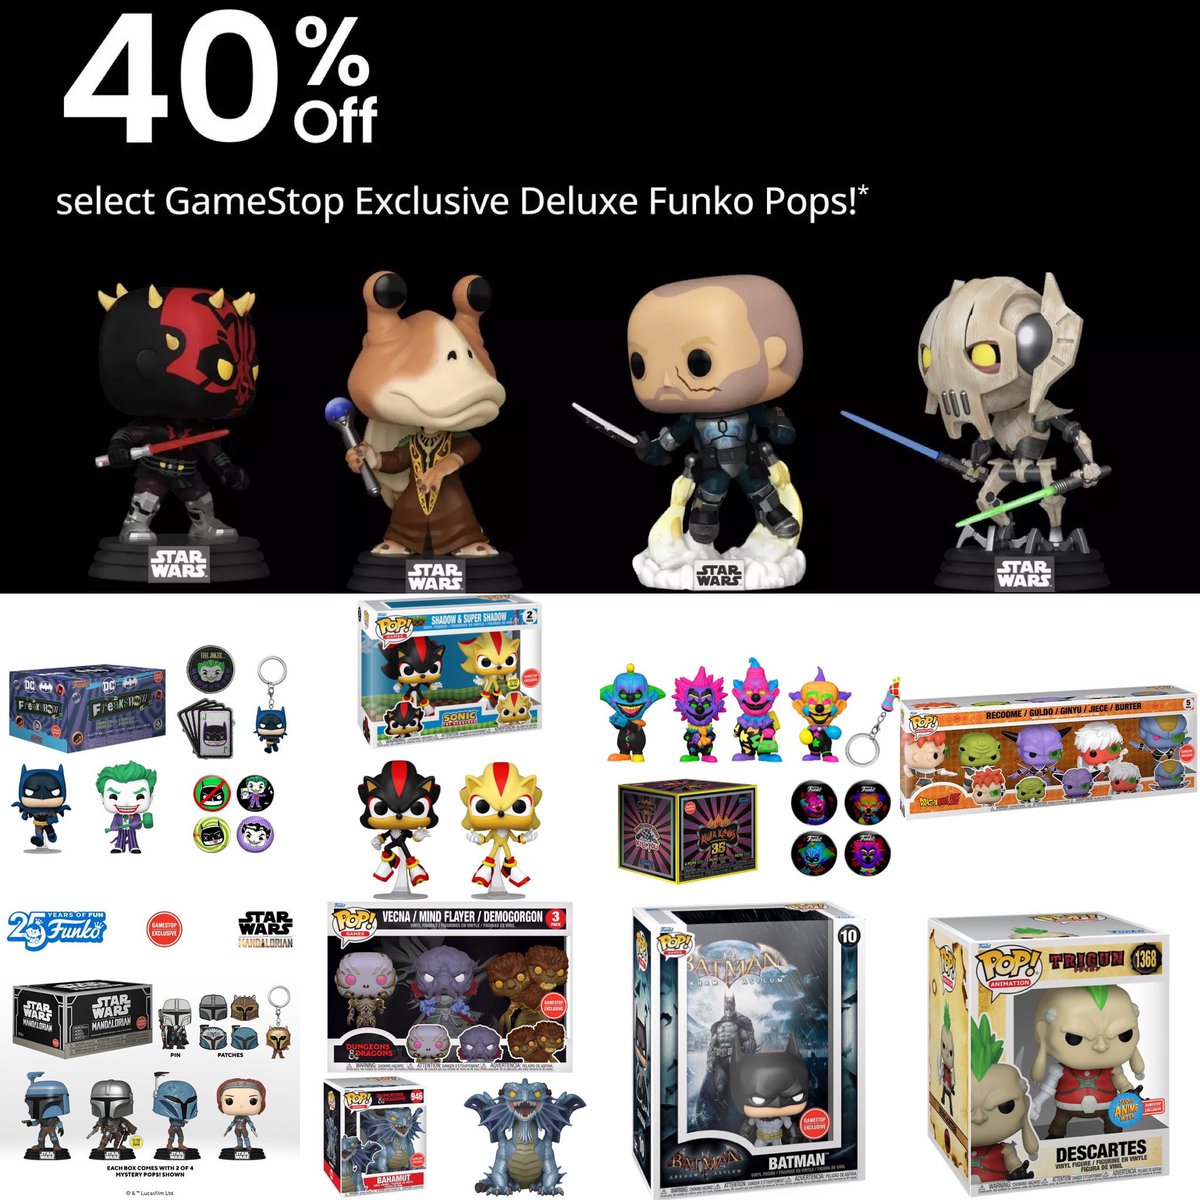 Deal 🚨- Select GameStop exclusives are 40% off!
#Ad #StarWars #DC #DnD #DBZ
.
distracker.info/3wibKap
.
#Funko #FunkoPop #FunkoPopVinyl #Pop #PopVinyl #Collectibles #Collectible #FunkoCollector #FunkoPops #Collector #Toy #Toys #DisTrackers